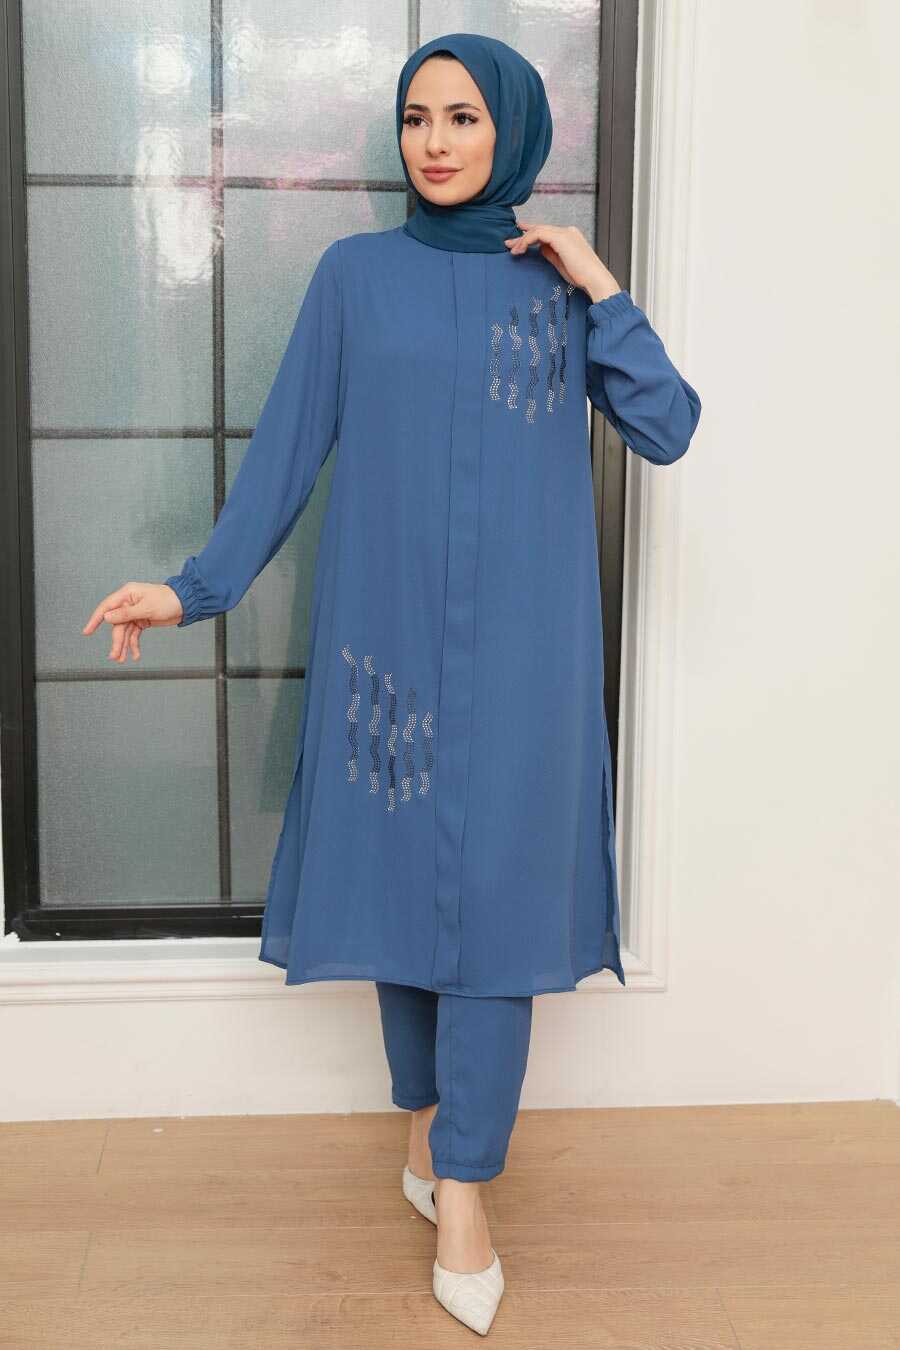 İndigo Blue Hijab Suit Dress 13090IM